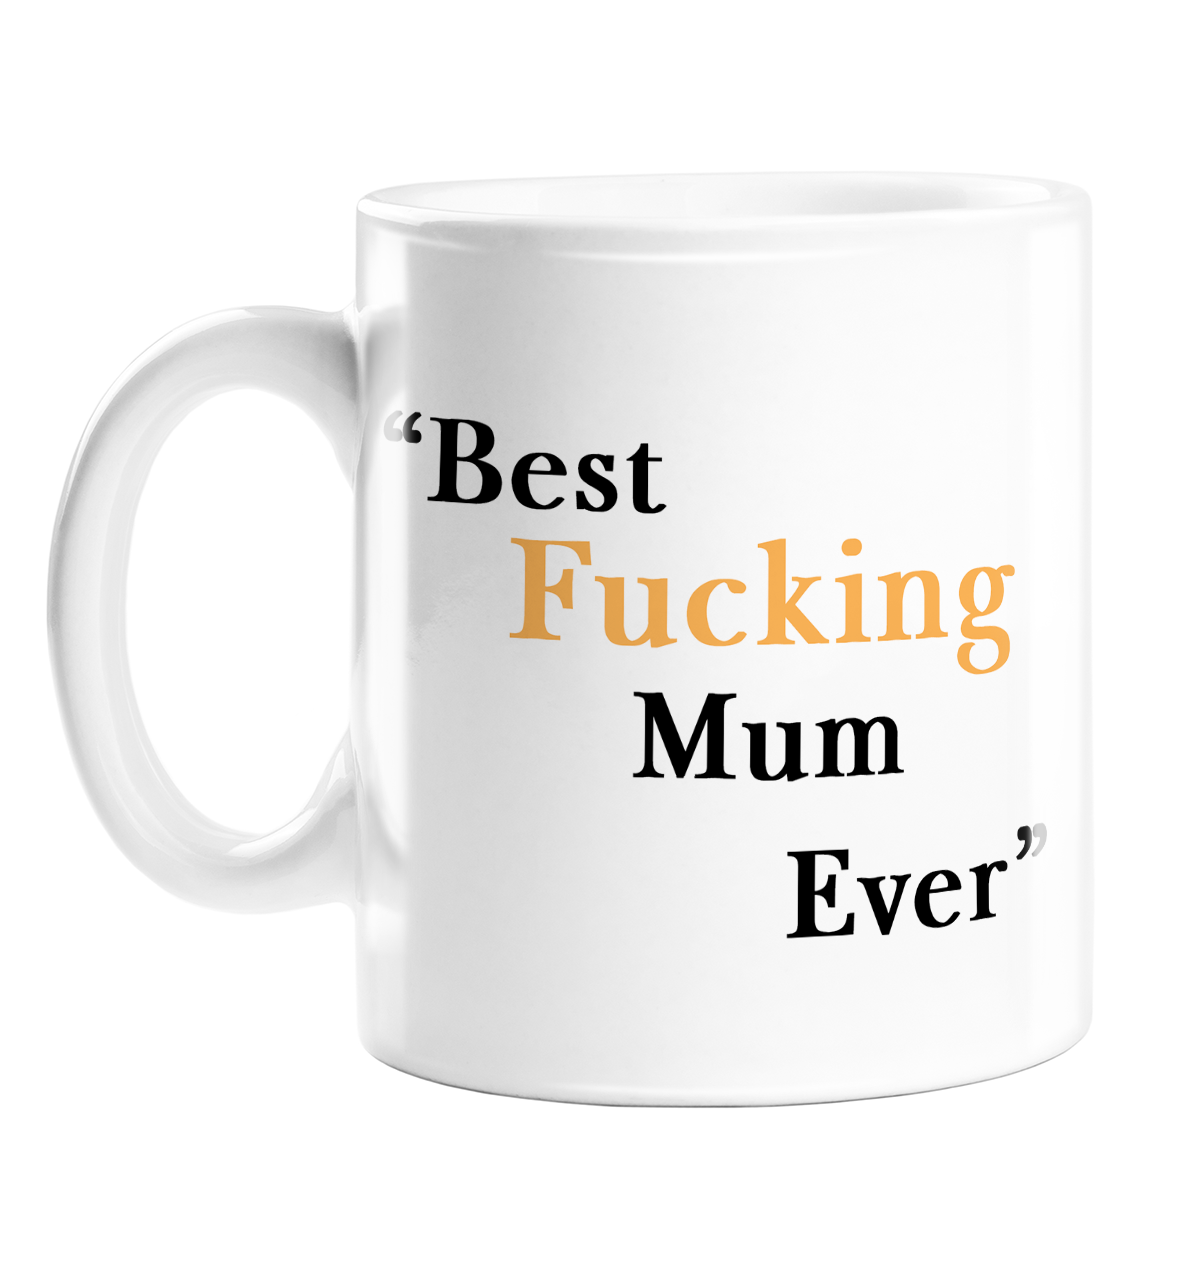 https://cdn.shopify.com/s/files/1/0264/3388/0149/products/best-fucking-mum-ever-mug.png?v=1607442895